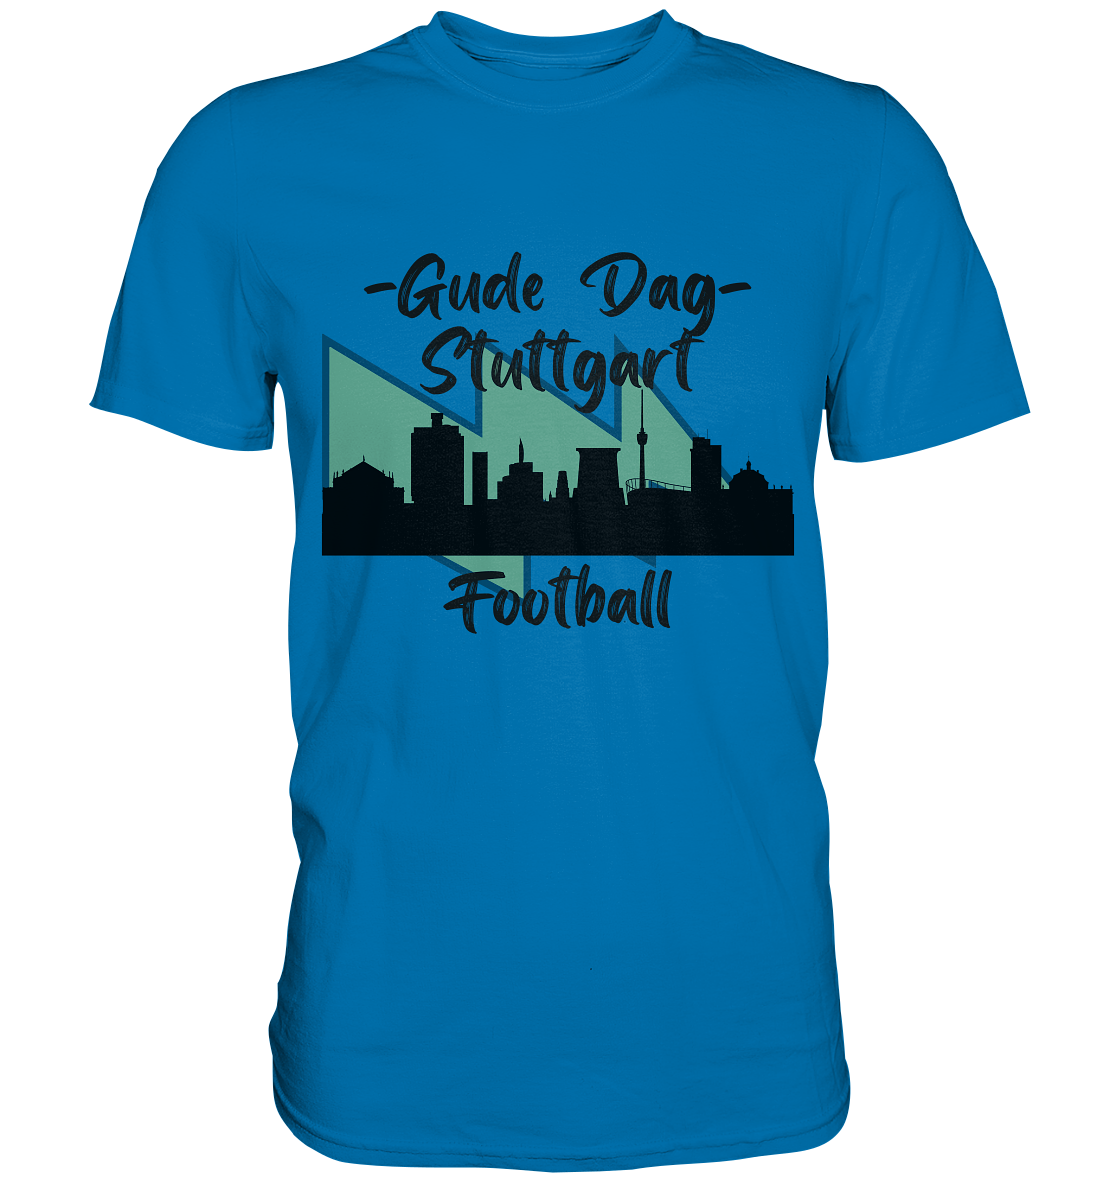 Gude Dag - Stuttgart Football - Premium Shirt - Football Unity Football Unity